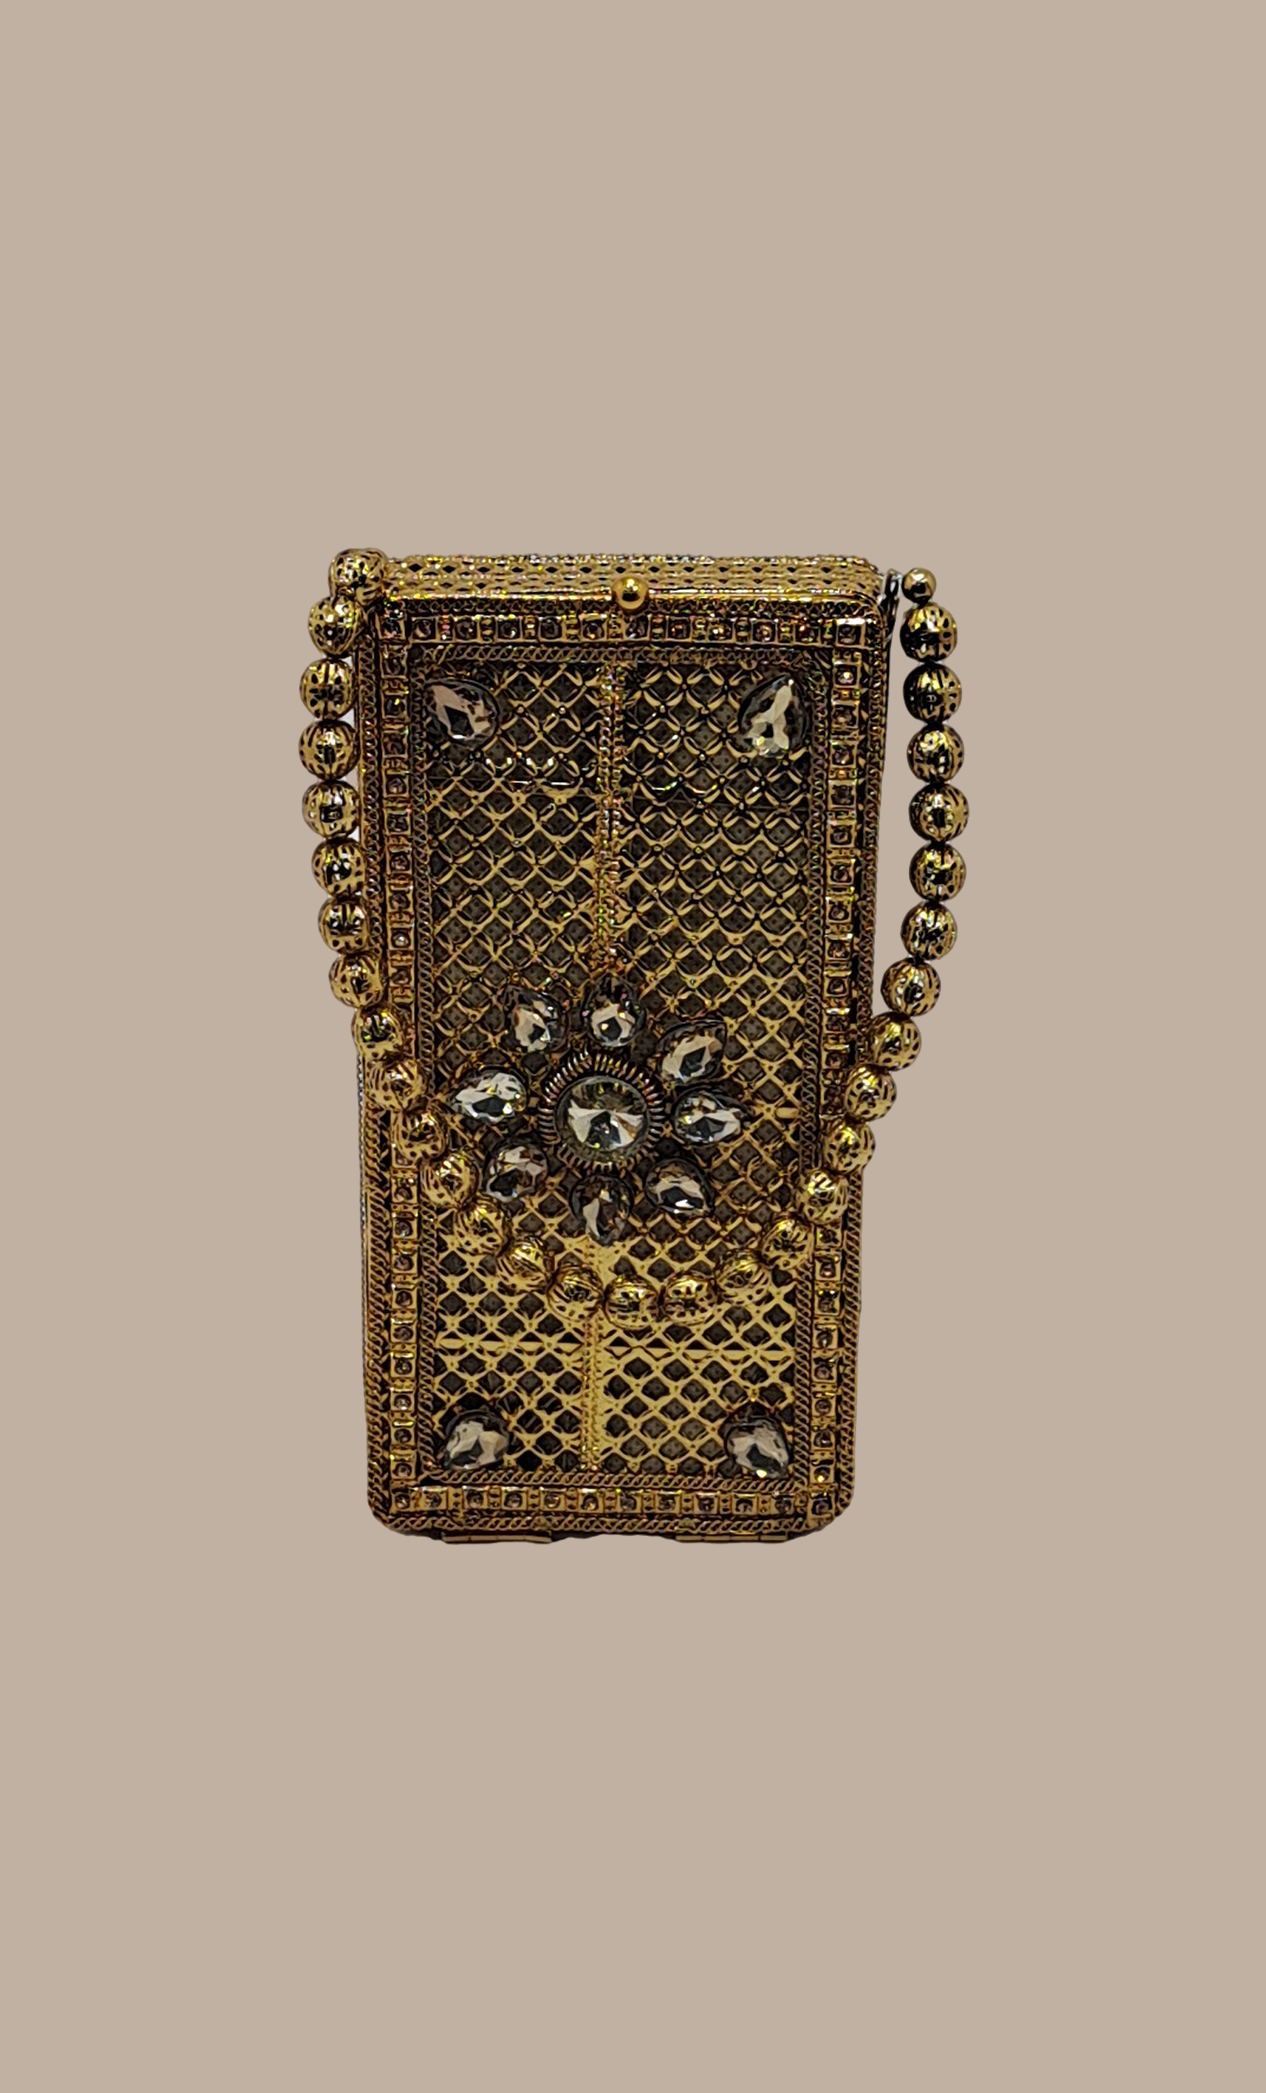 Gold Metal Cell Phone Bag